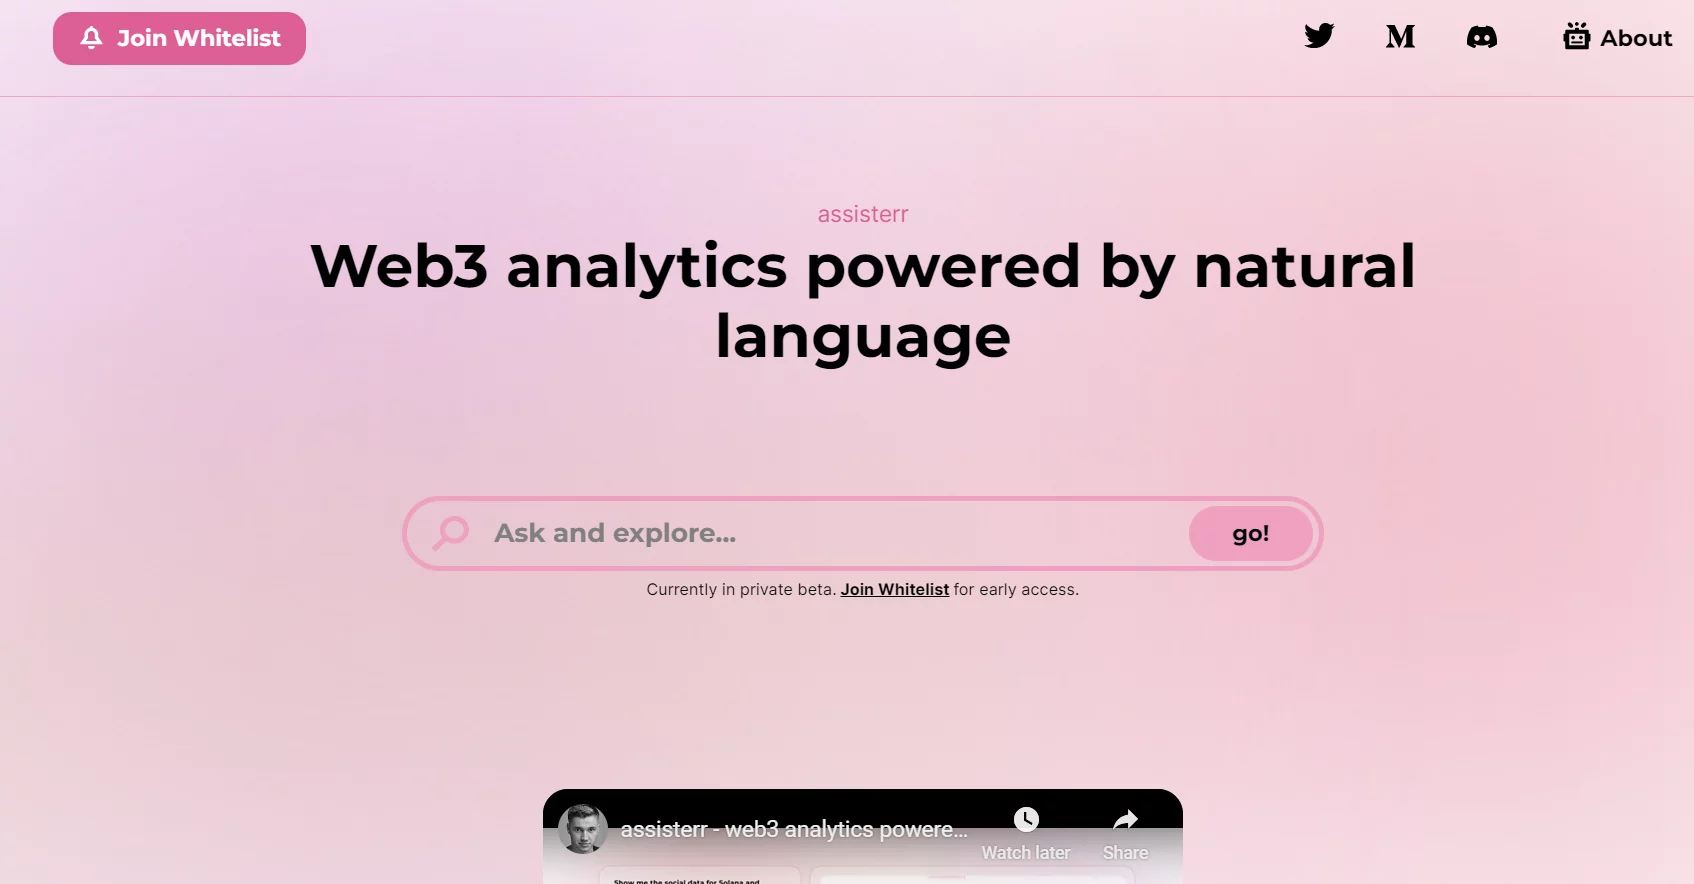  Web3 analytics powered by natural language